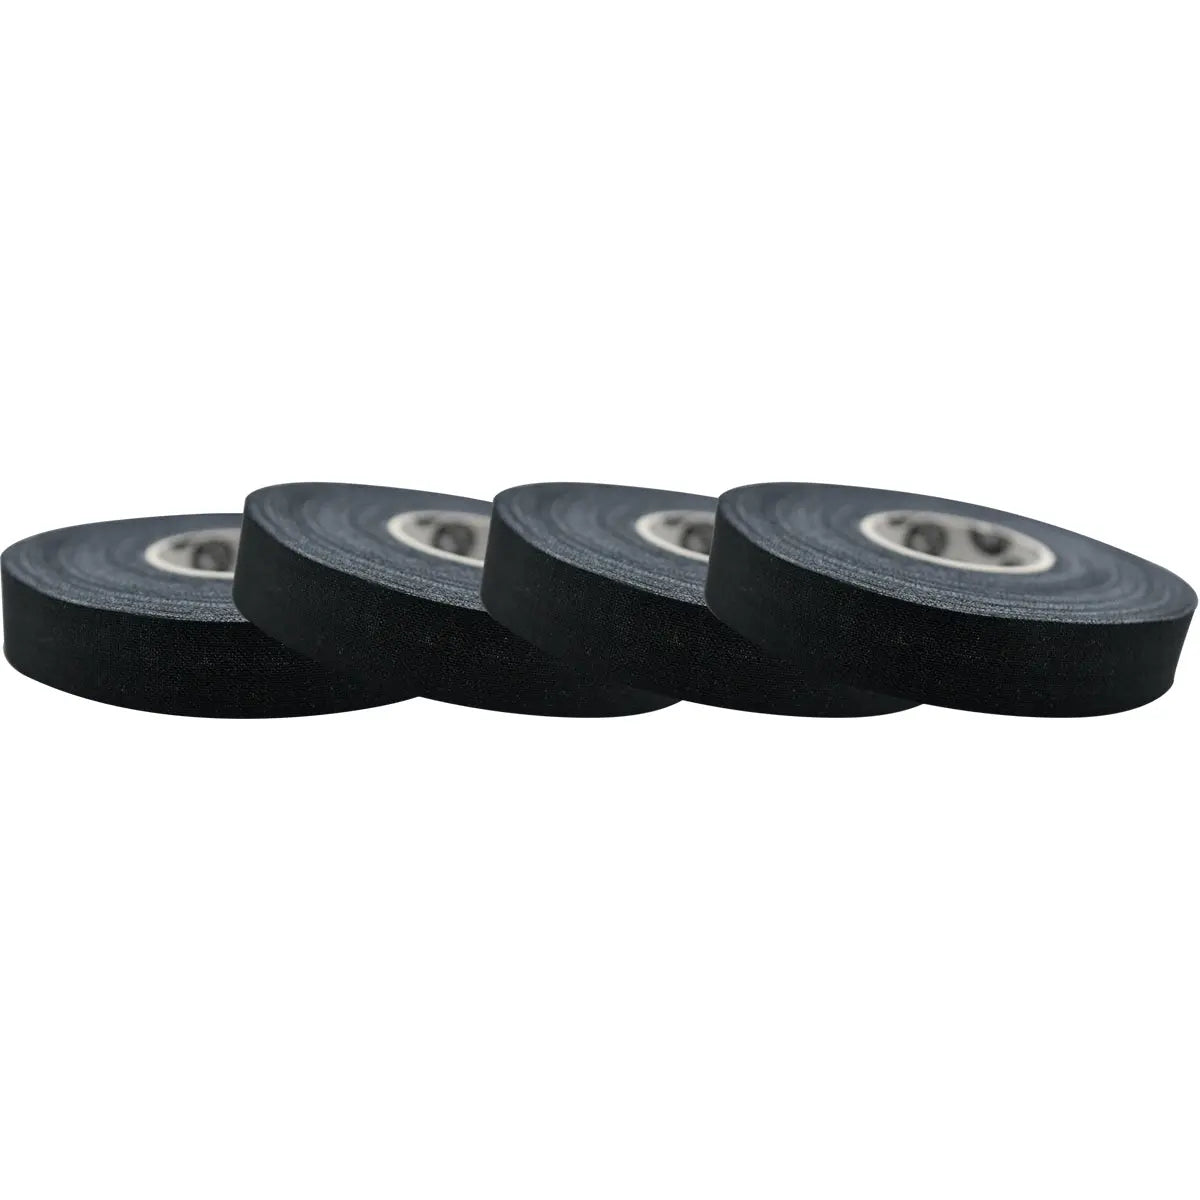 Monkey Tape 4-Pack (0.2”, 0.3”, 0.4”, or 0.5”) x 15yds Premium Jiu Jitsu Sports Athletic Finger Tape - for BJJ, Grappling, Crossfit, MMA, & Judo